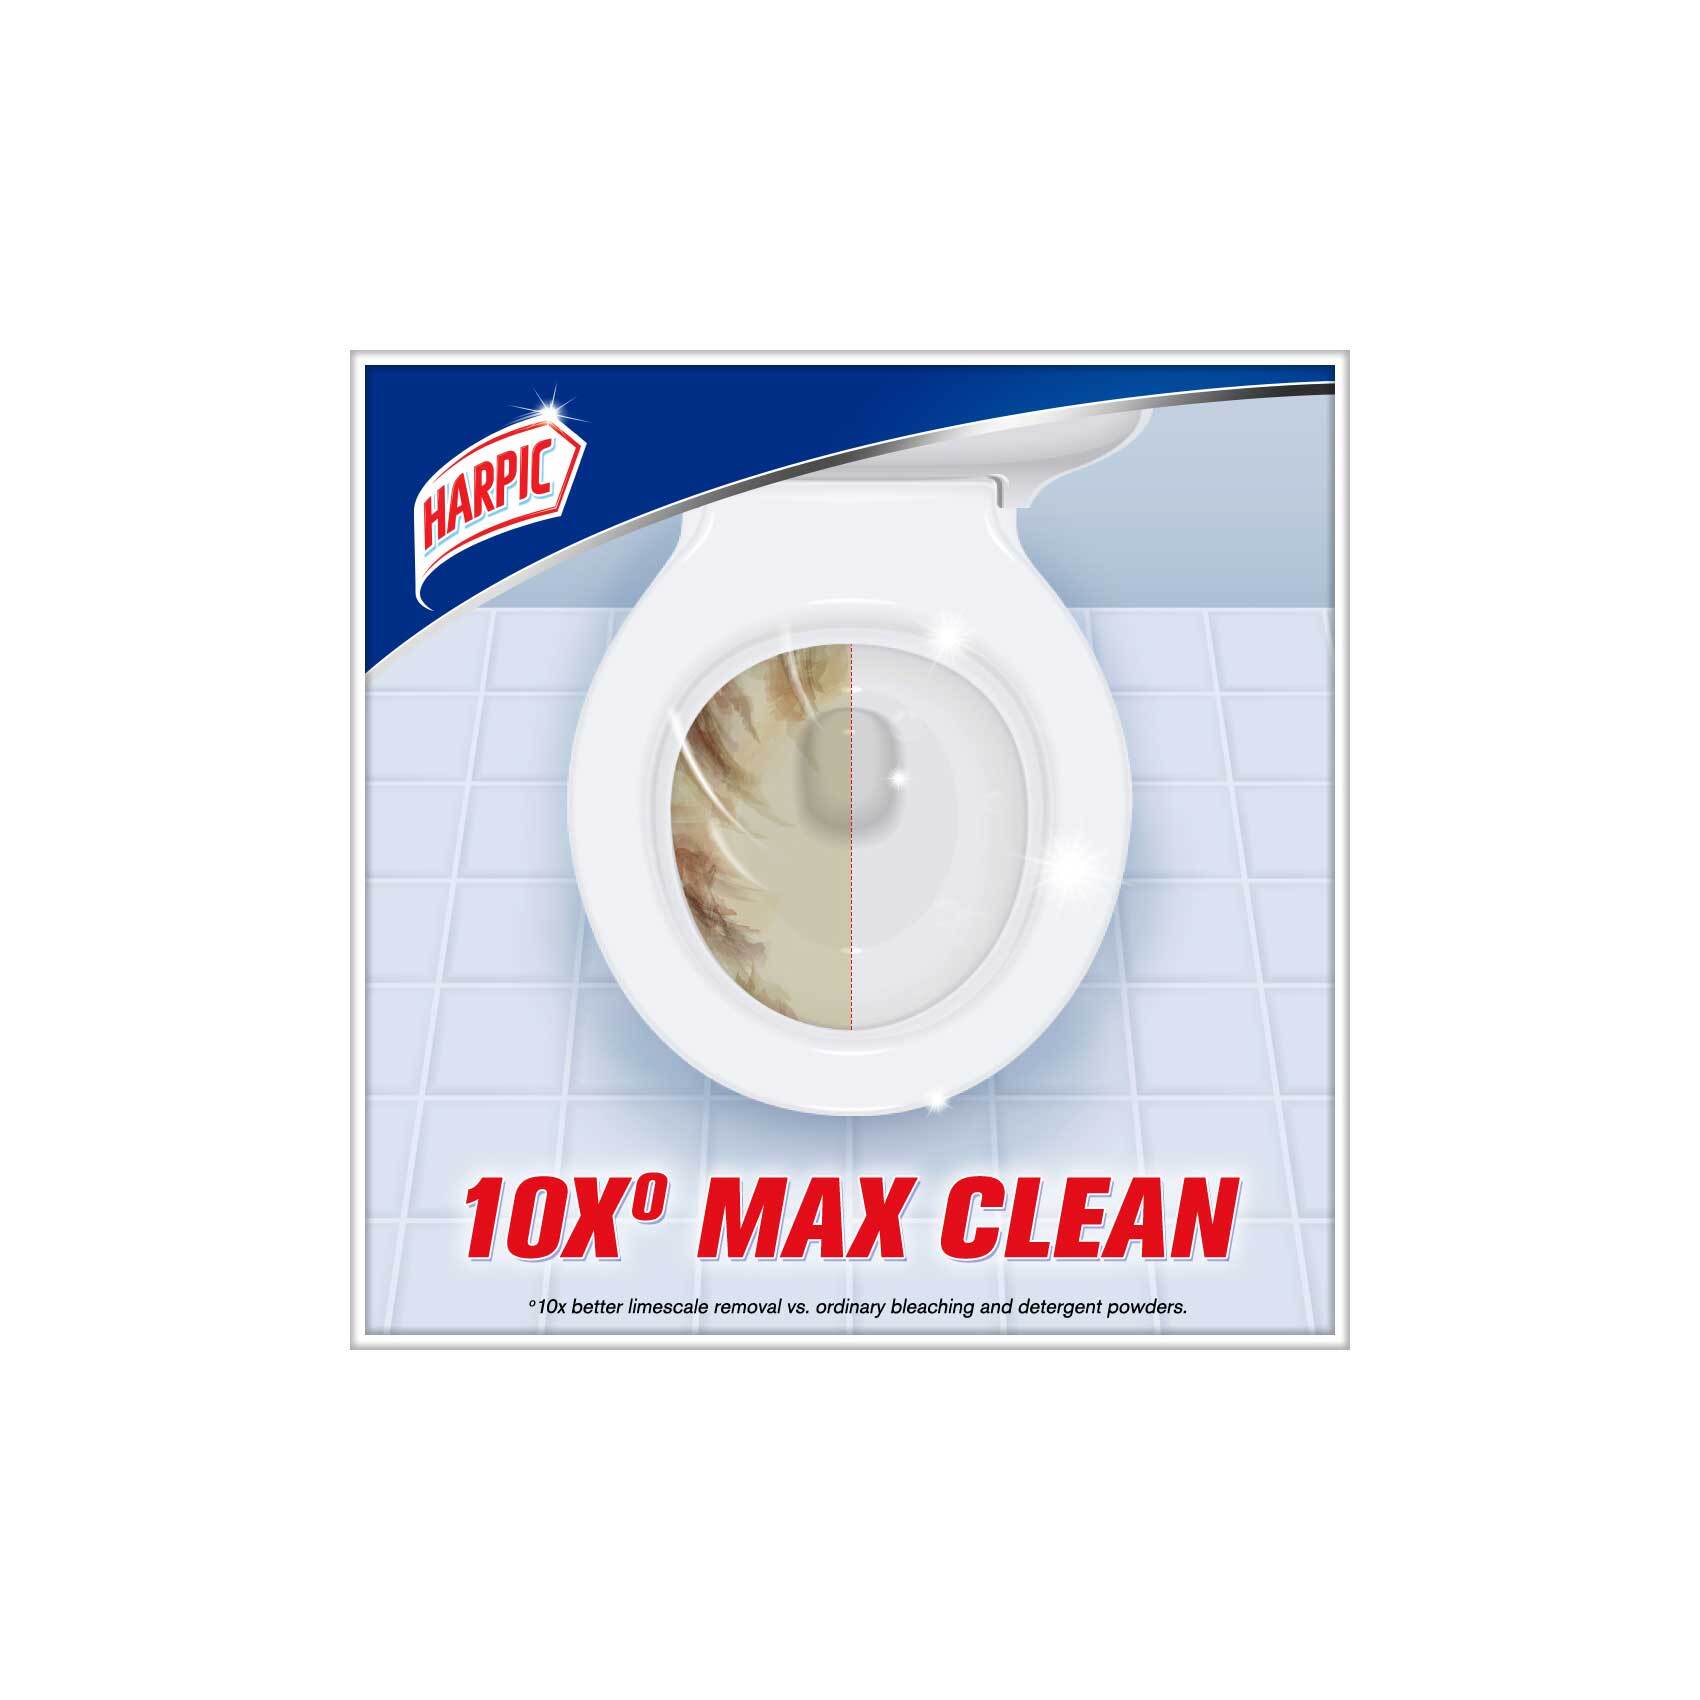 Harpic power plus 10x max clean joyfull jasmine - Price History